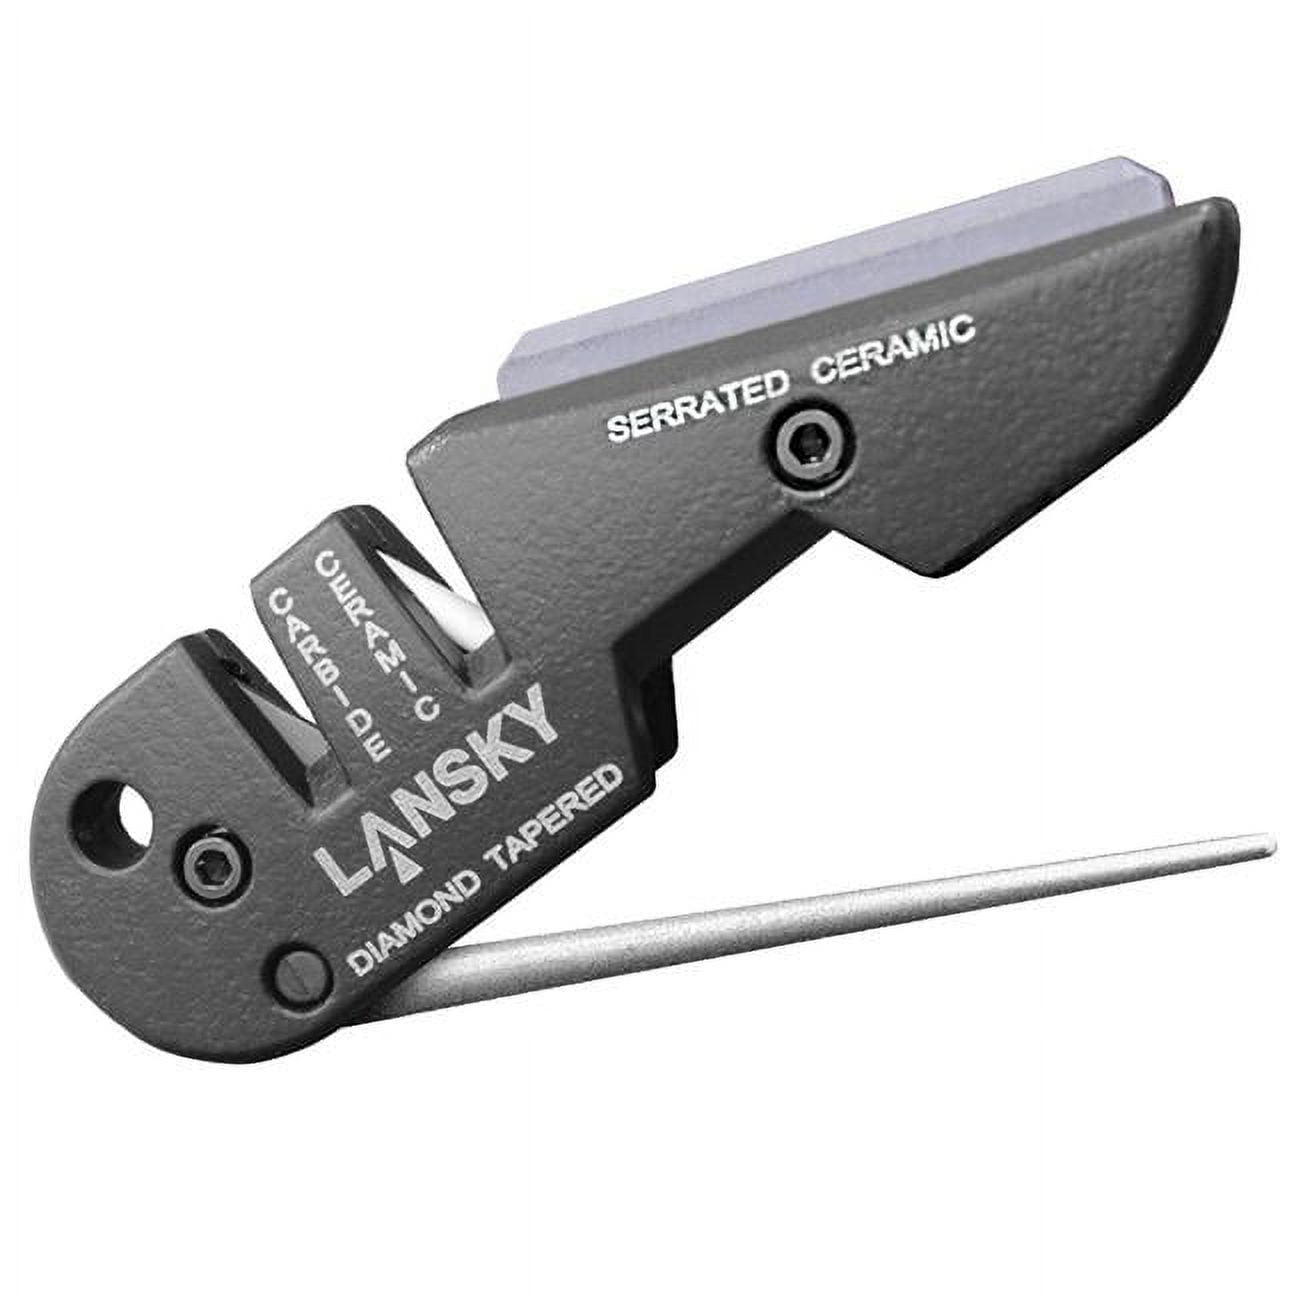  Rolling Knife Sharpener - Knife Sharpening Kit with Diamond &  Ceramic Discs 15/20° Multifunction Magnetic Angle Base for Pocket Knife,  Kitchen Knives, Chef Knife Set, Scissors